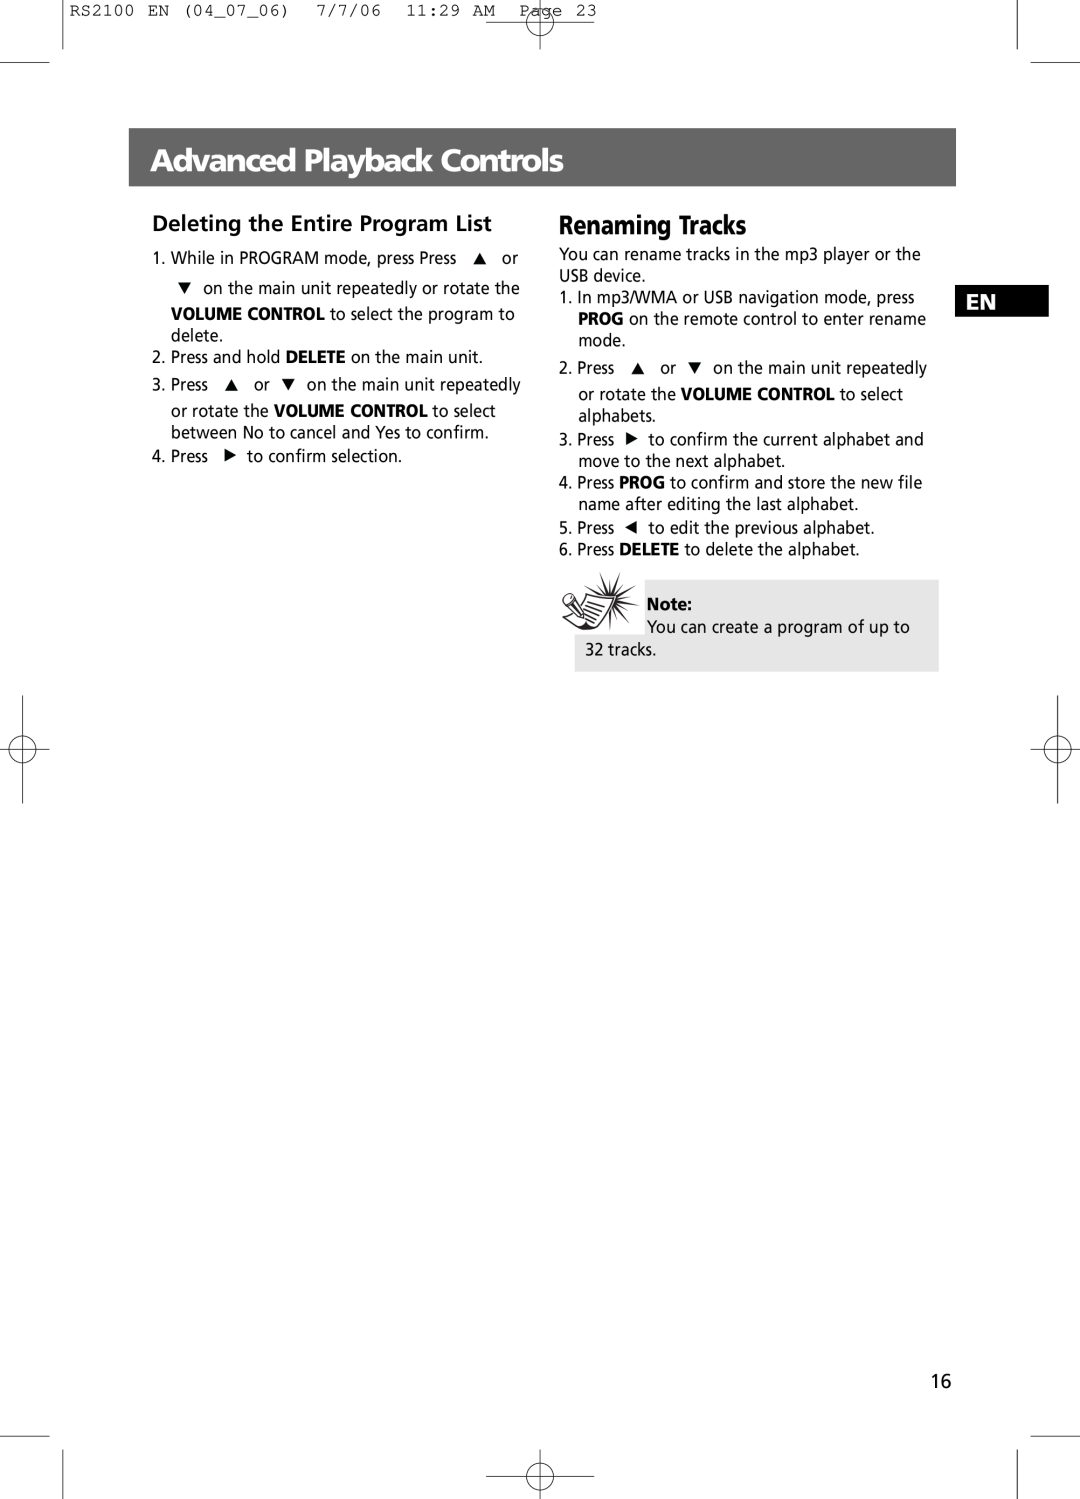 RCA RS2100 user manual Renaming Tracks, Advanced Playback Controls, Deleting the Entire Program List 